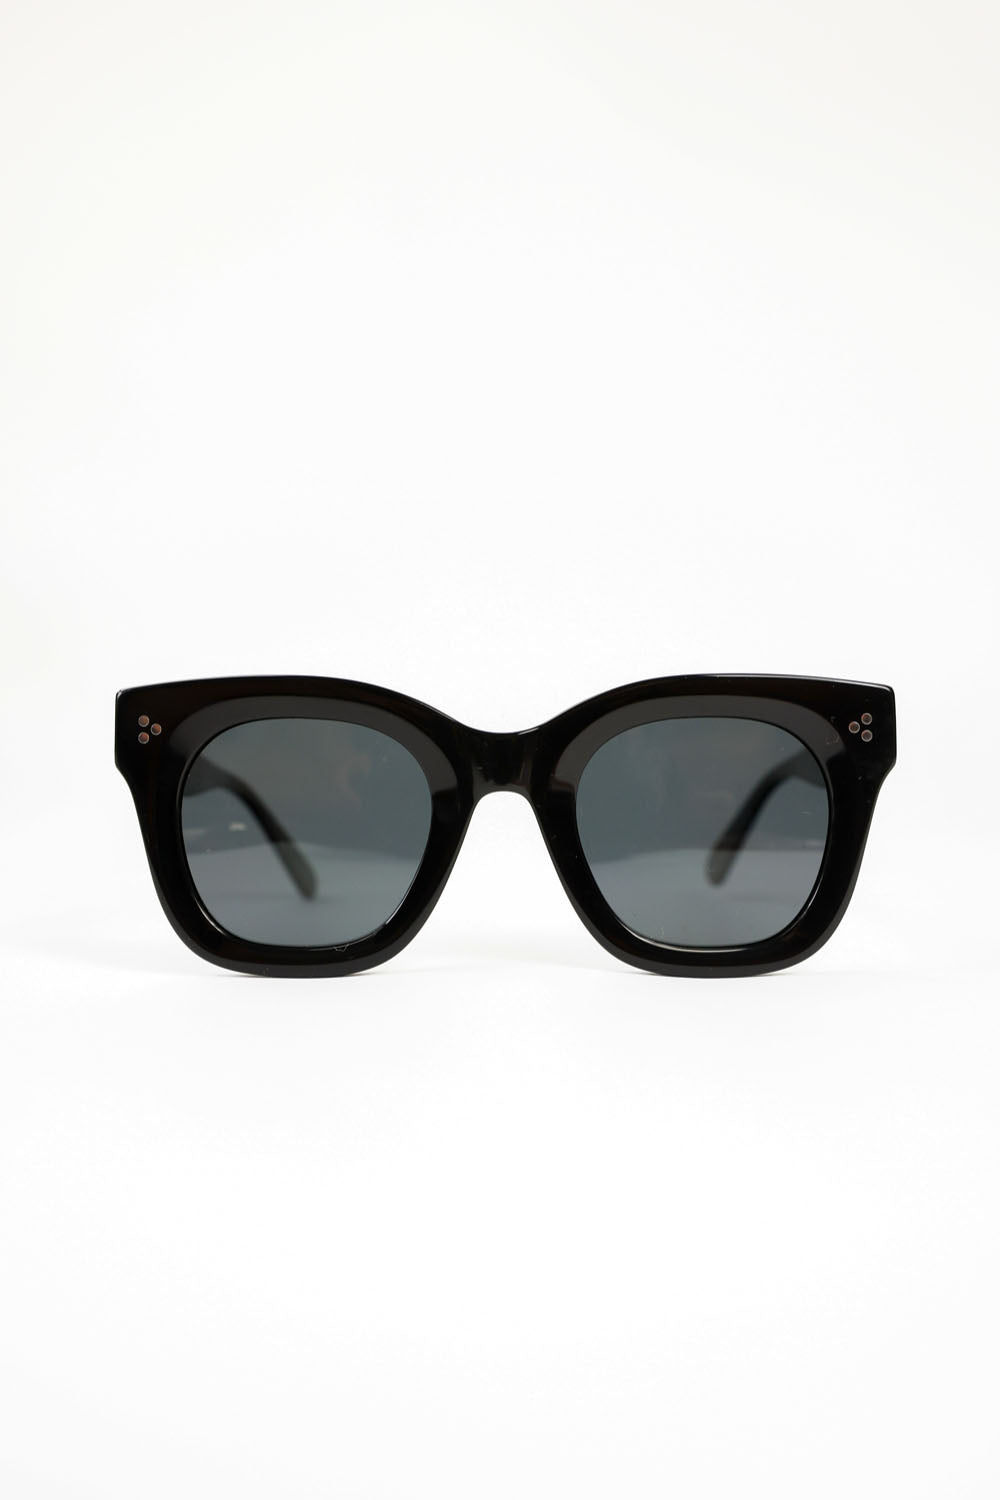 Calista Sunglasses